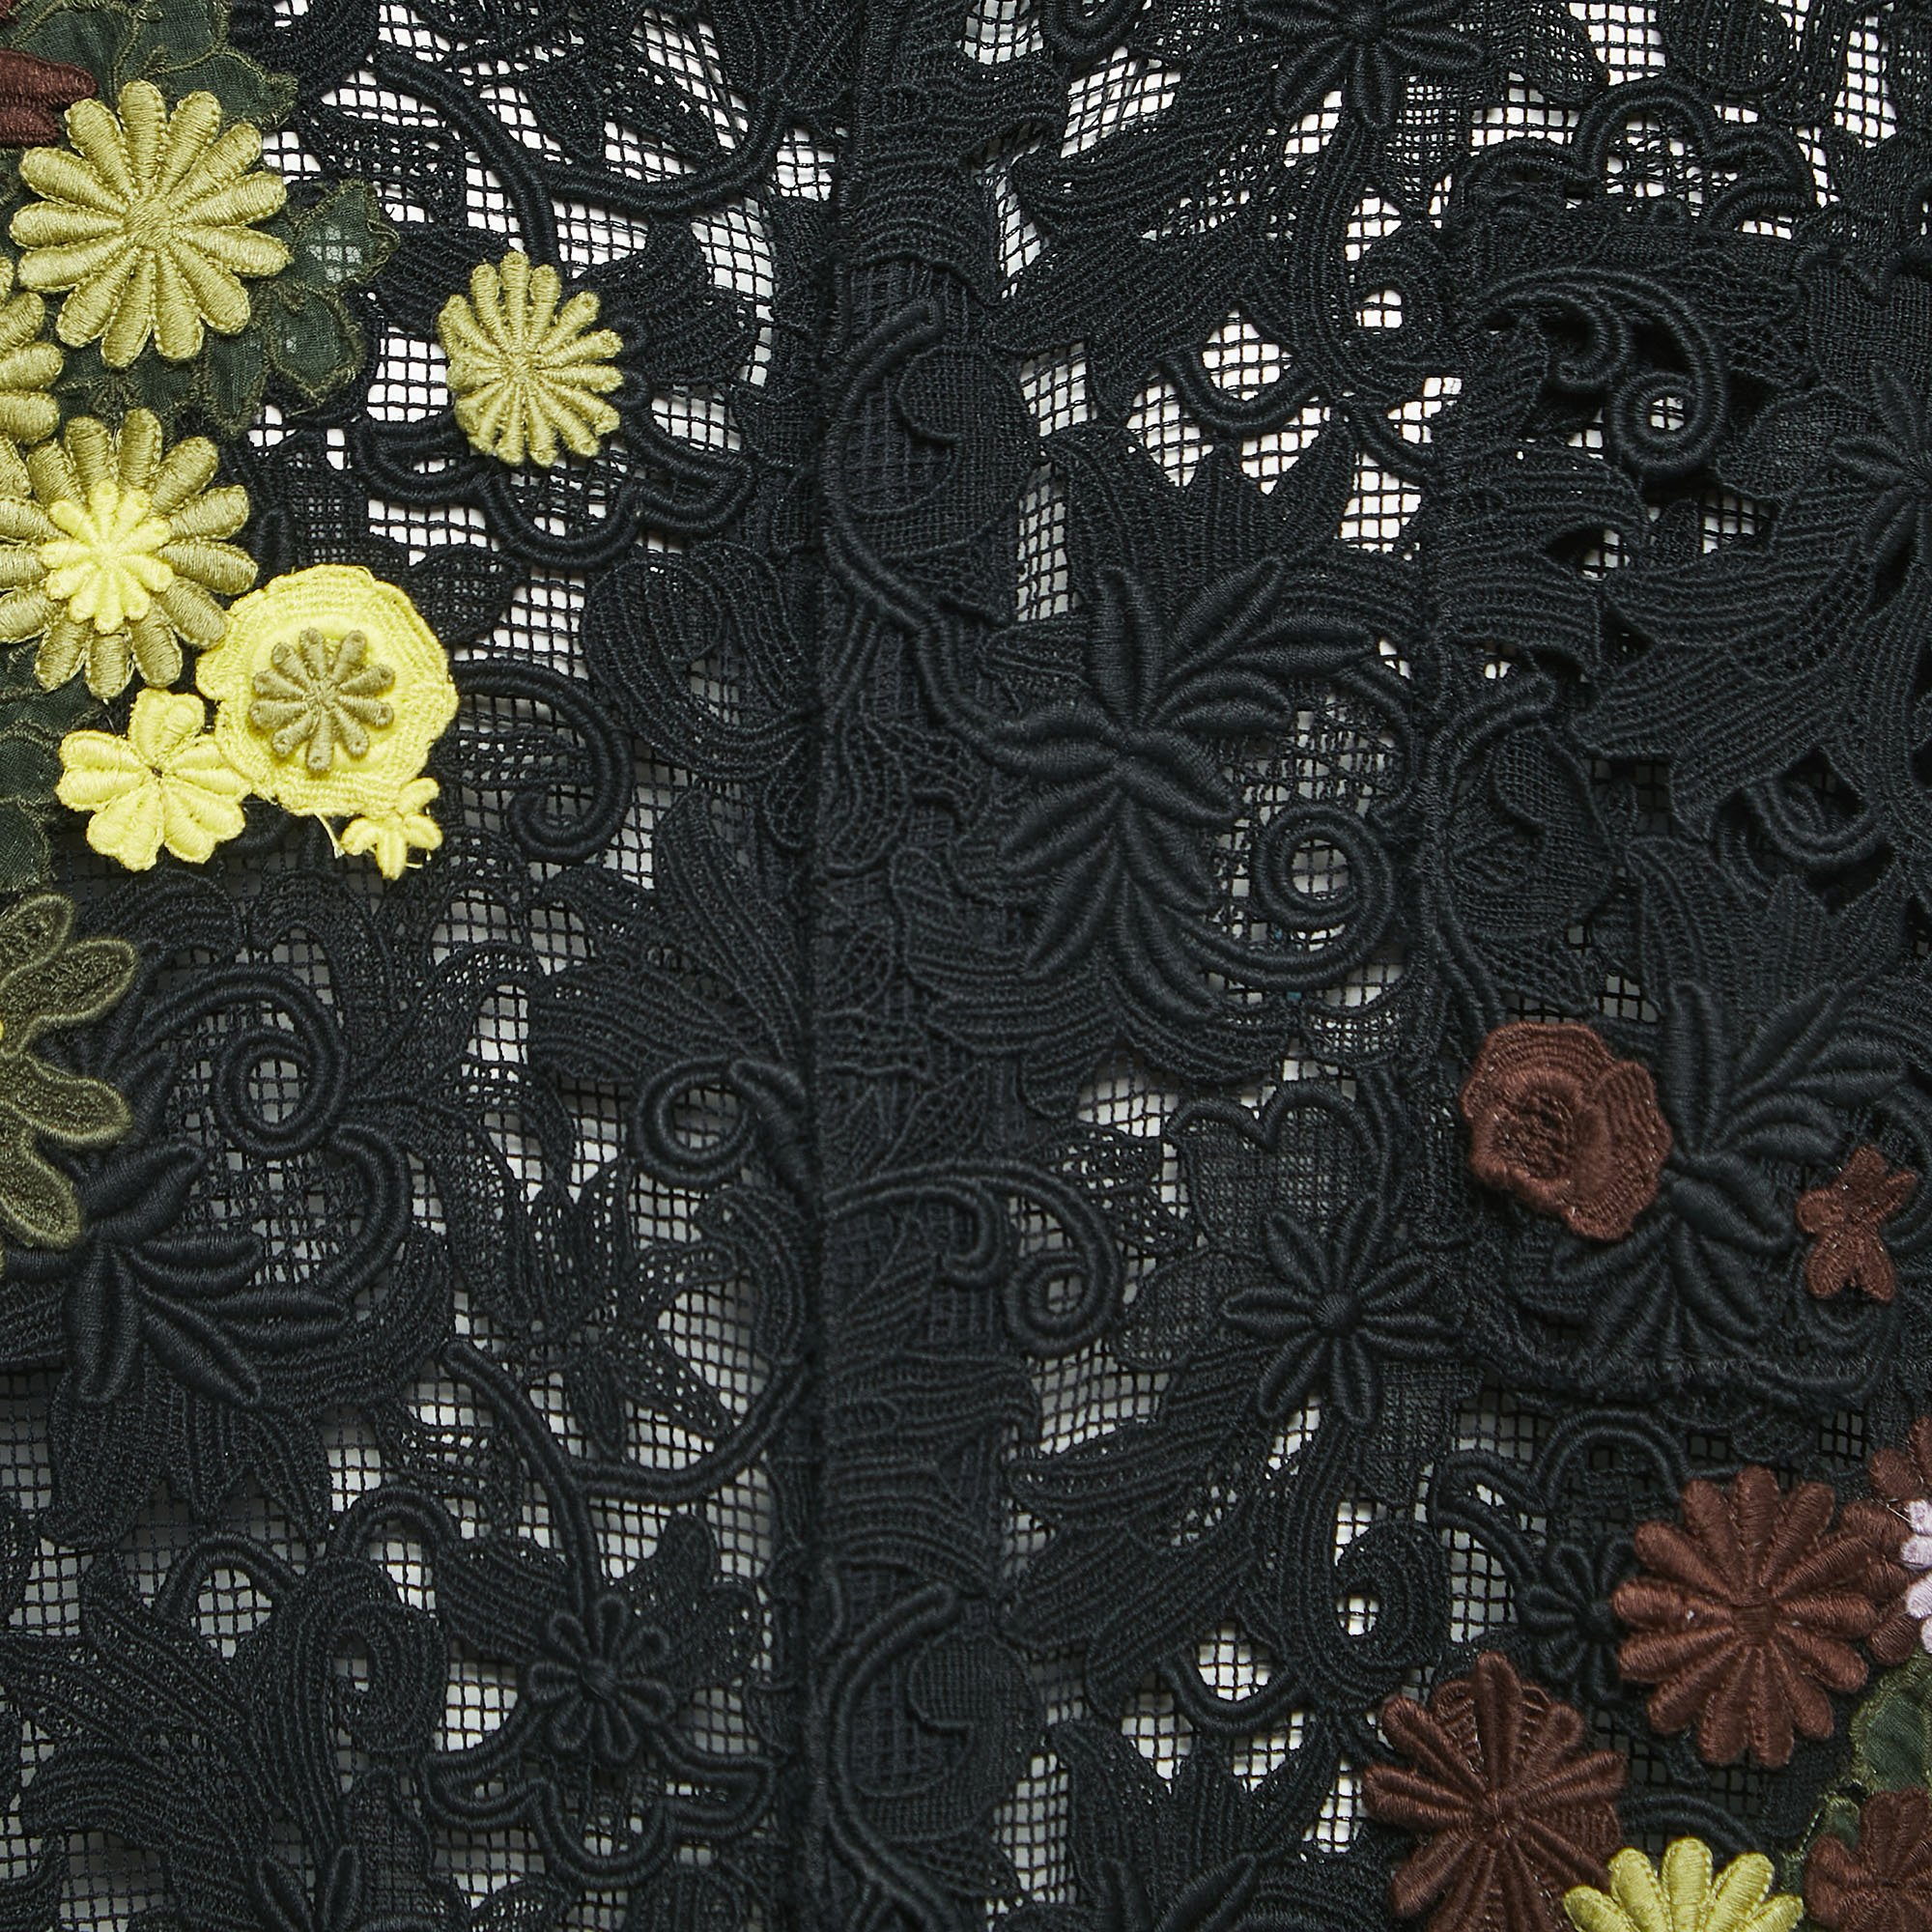 Valentino Black Floral Lace Shorts Shirt Set L